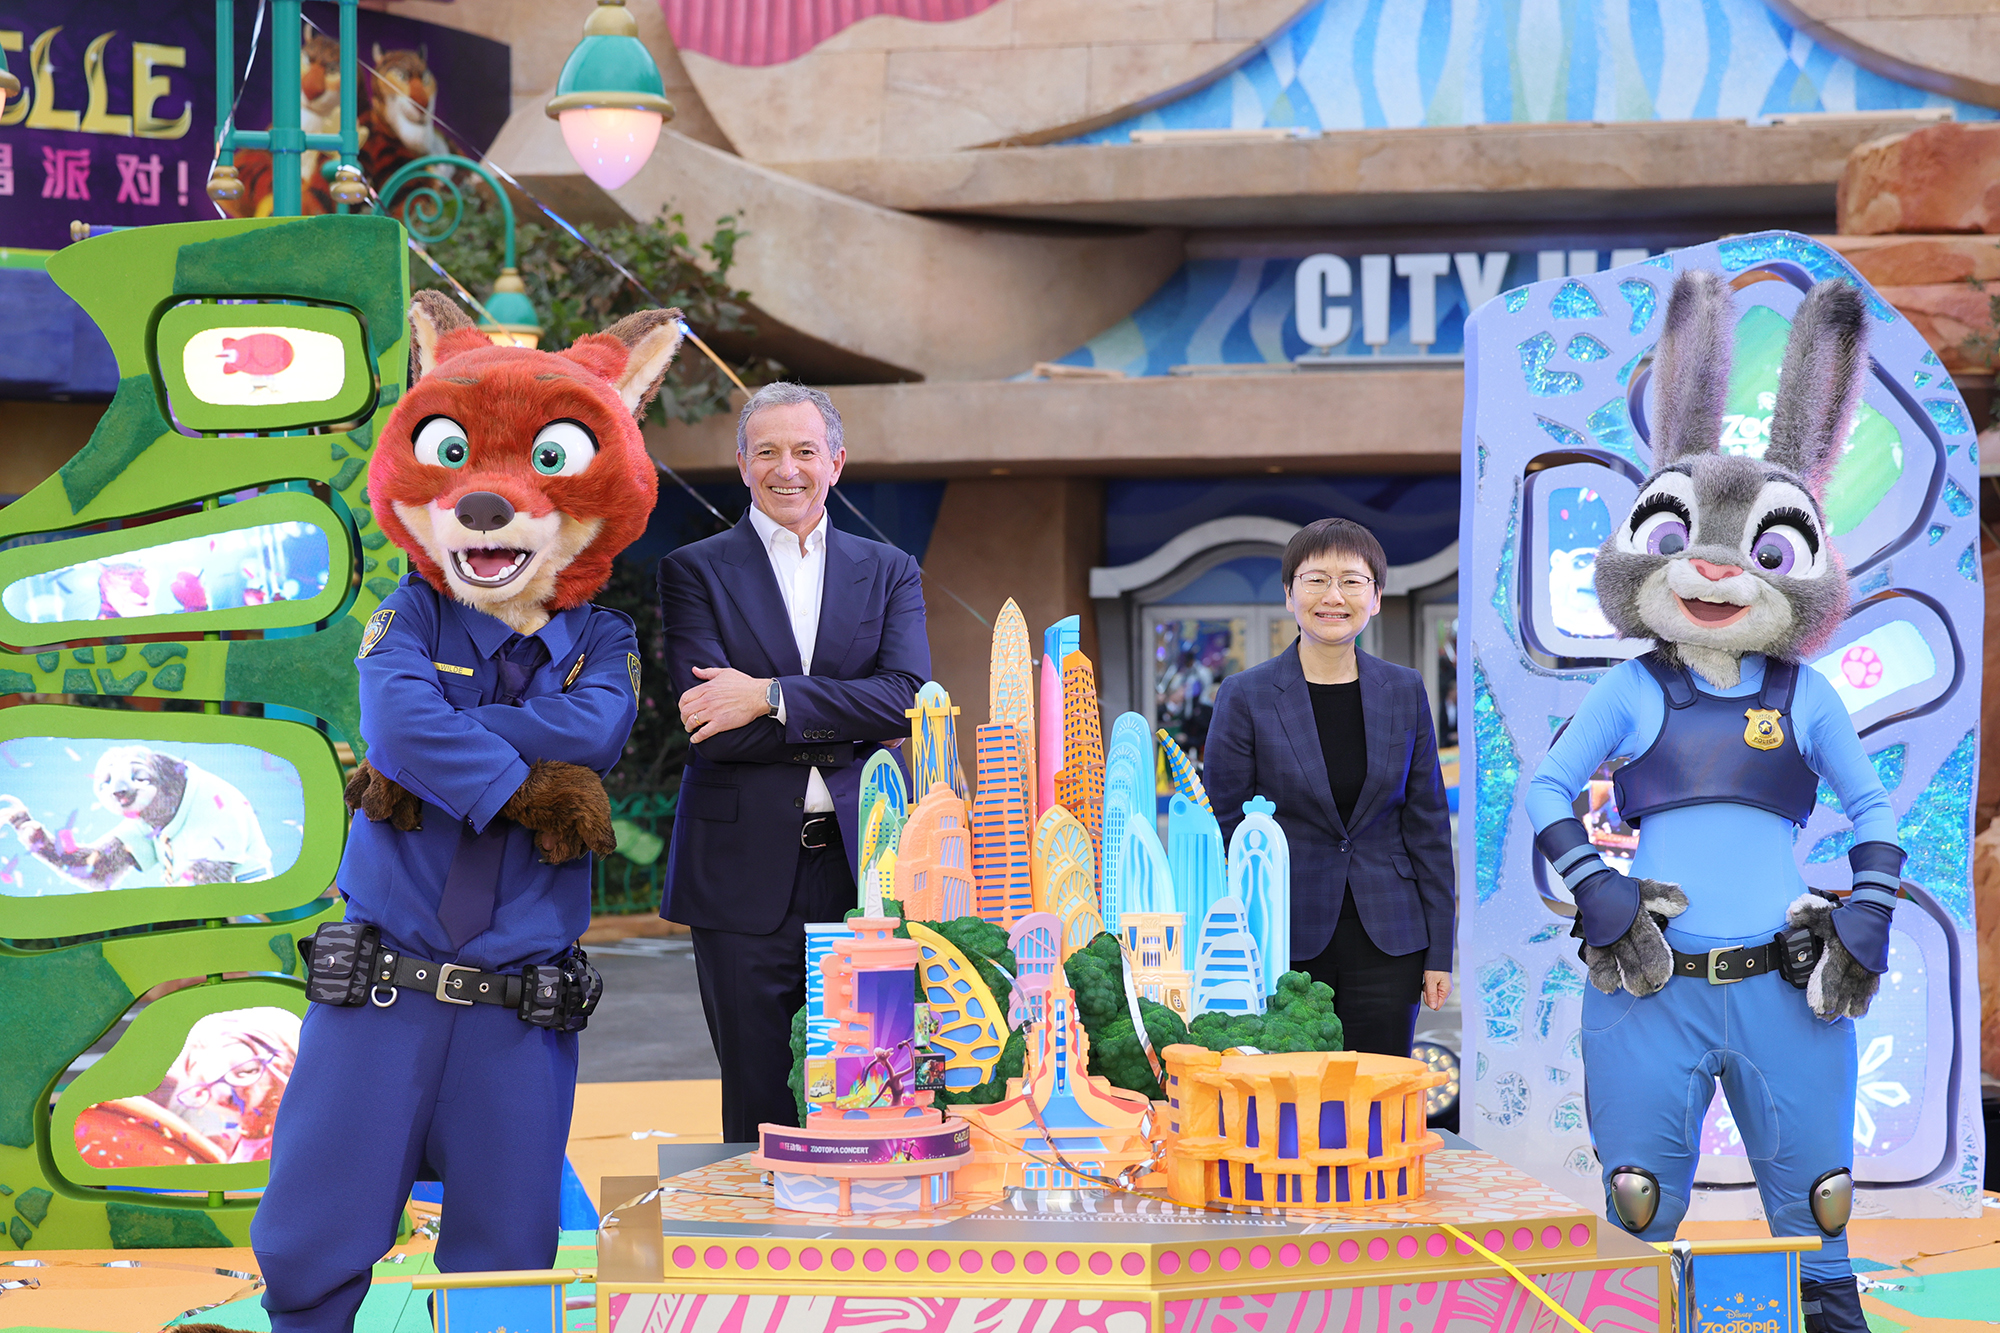 Zootastic Celebration: Welcome to Zootopia Land at Shanghai Disney!